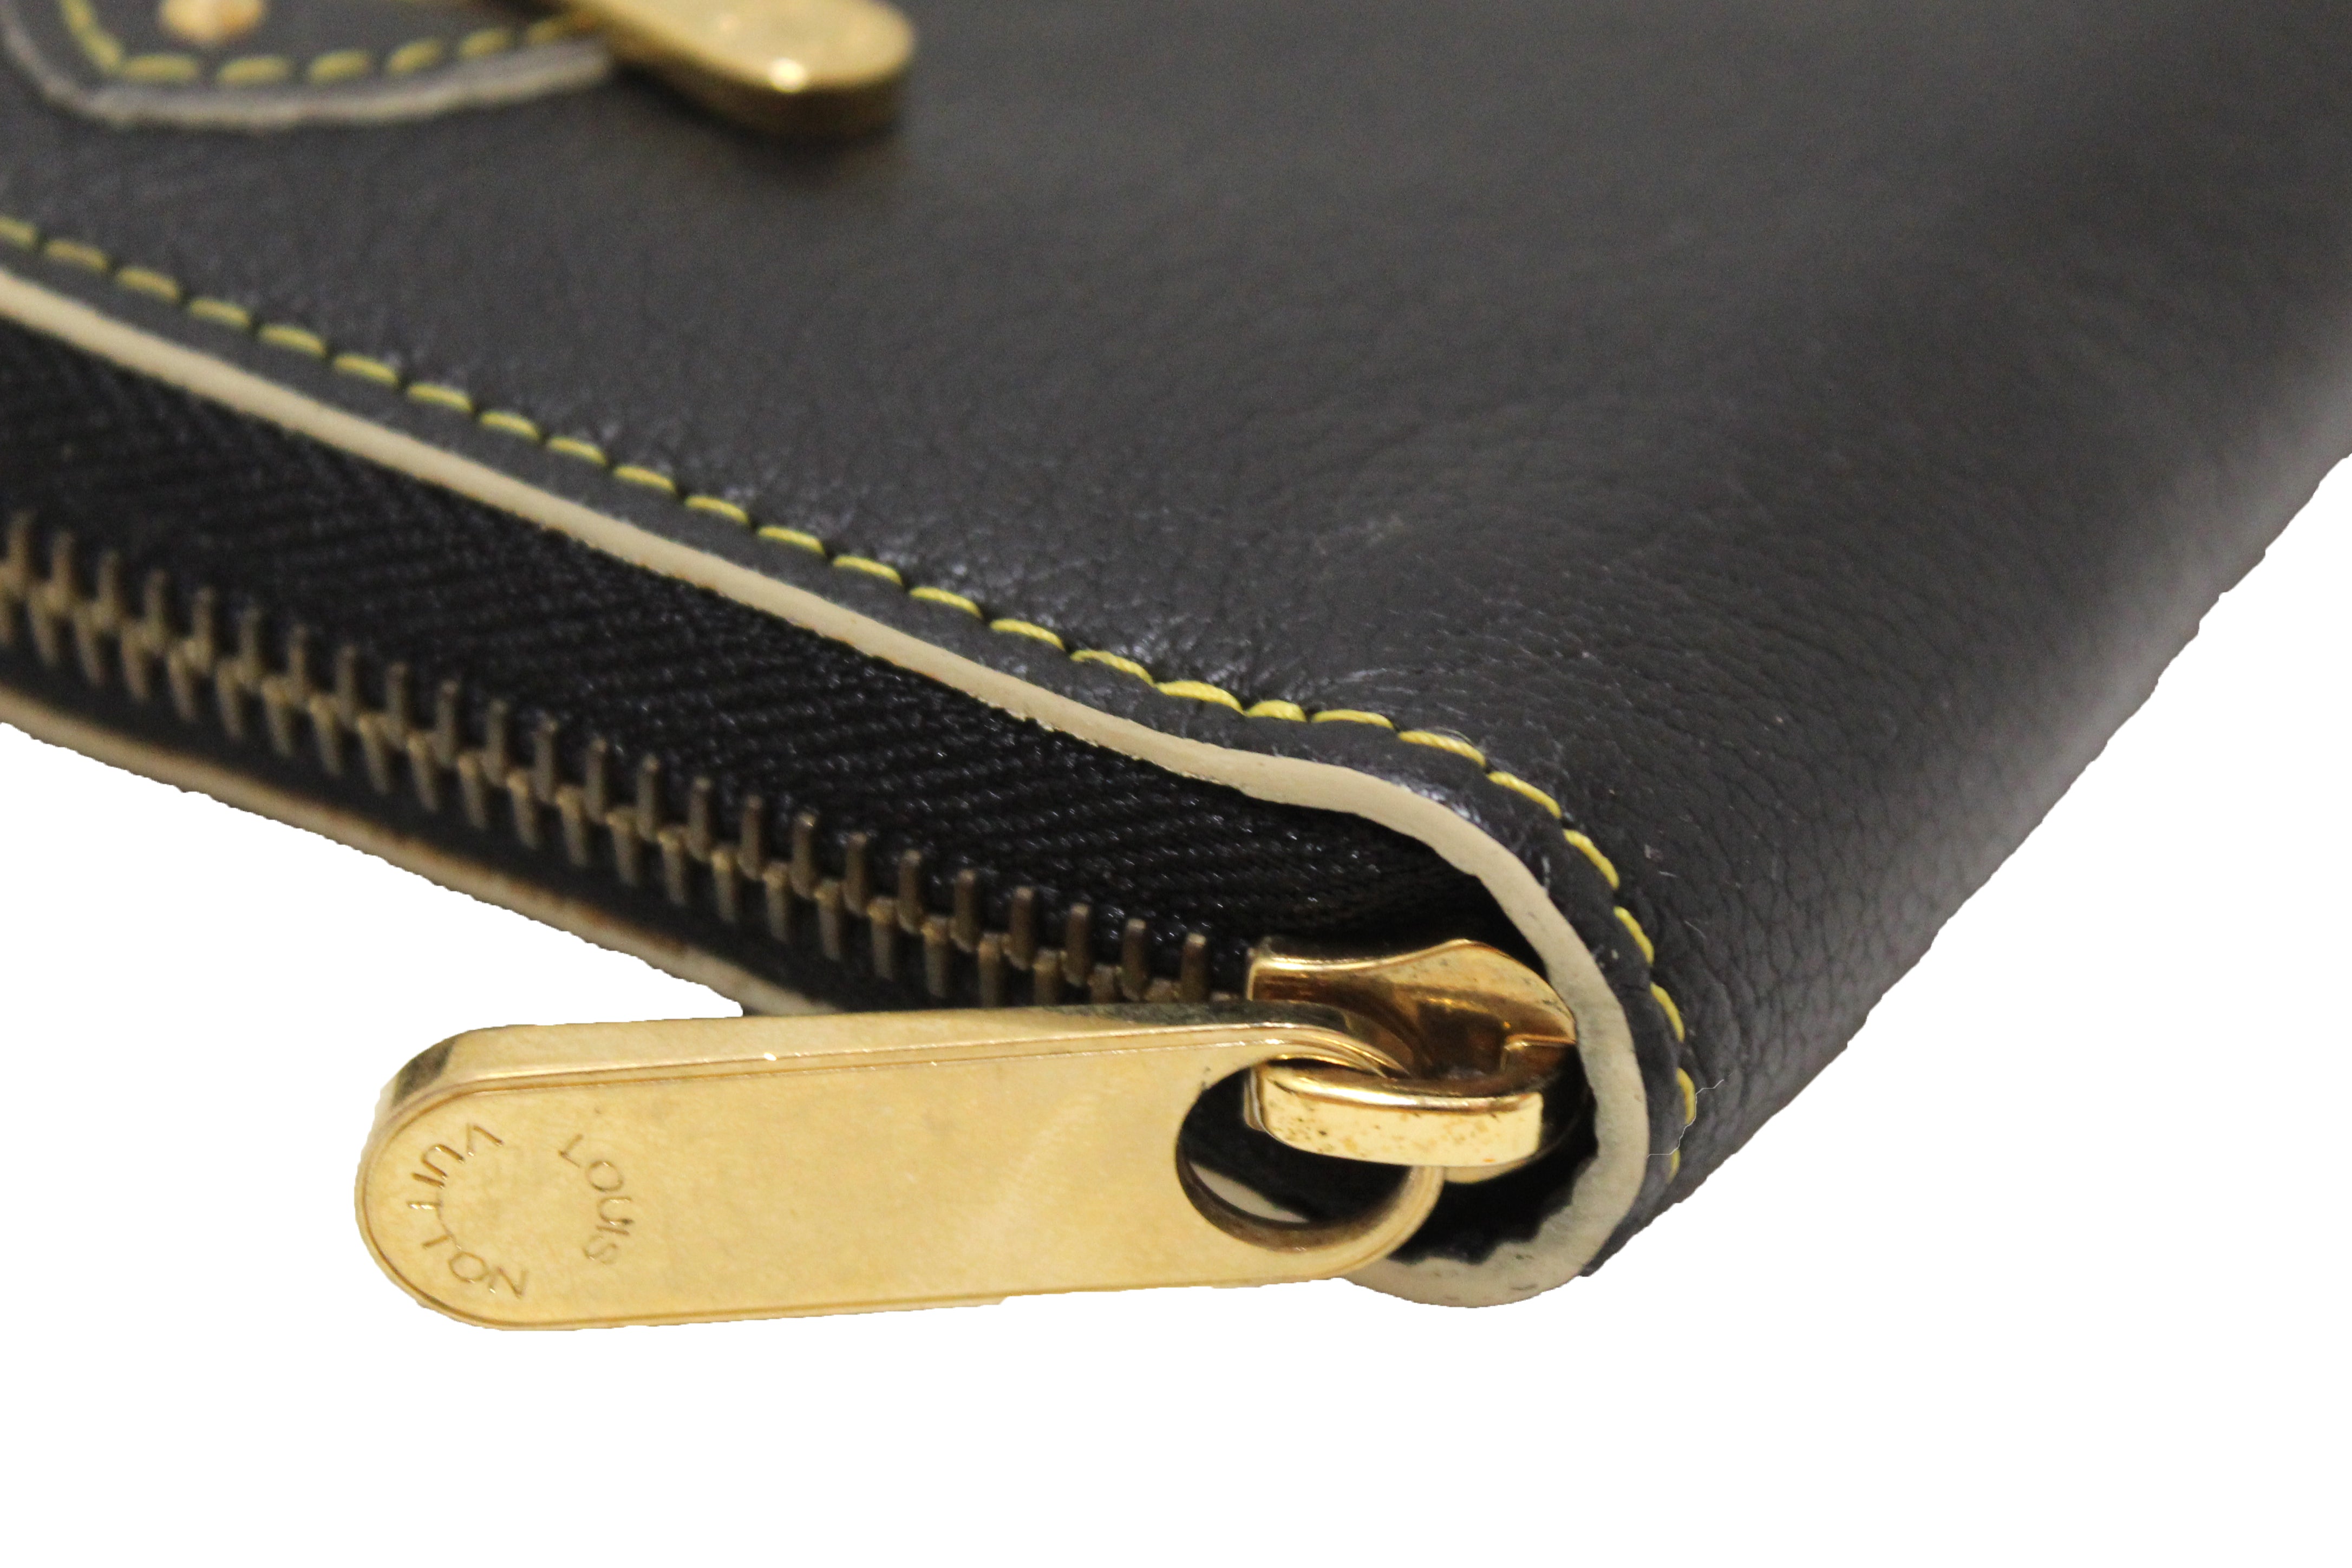 Louis Vuitton Black Suhali Wallet